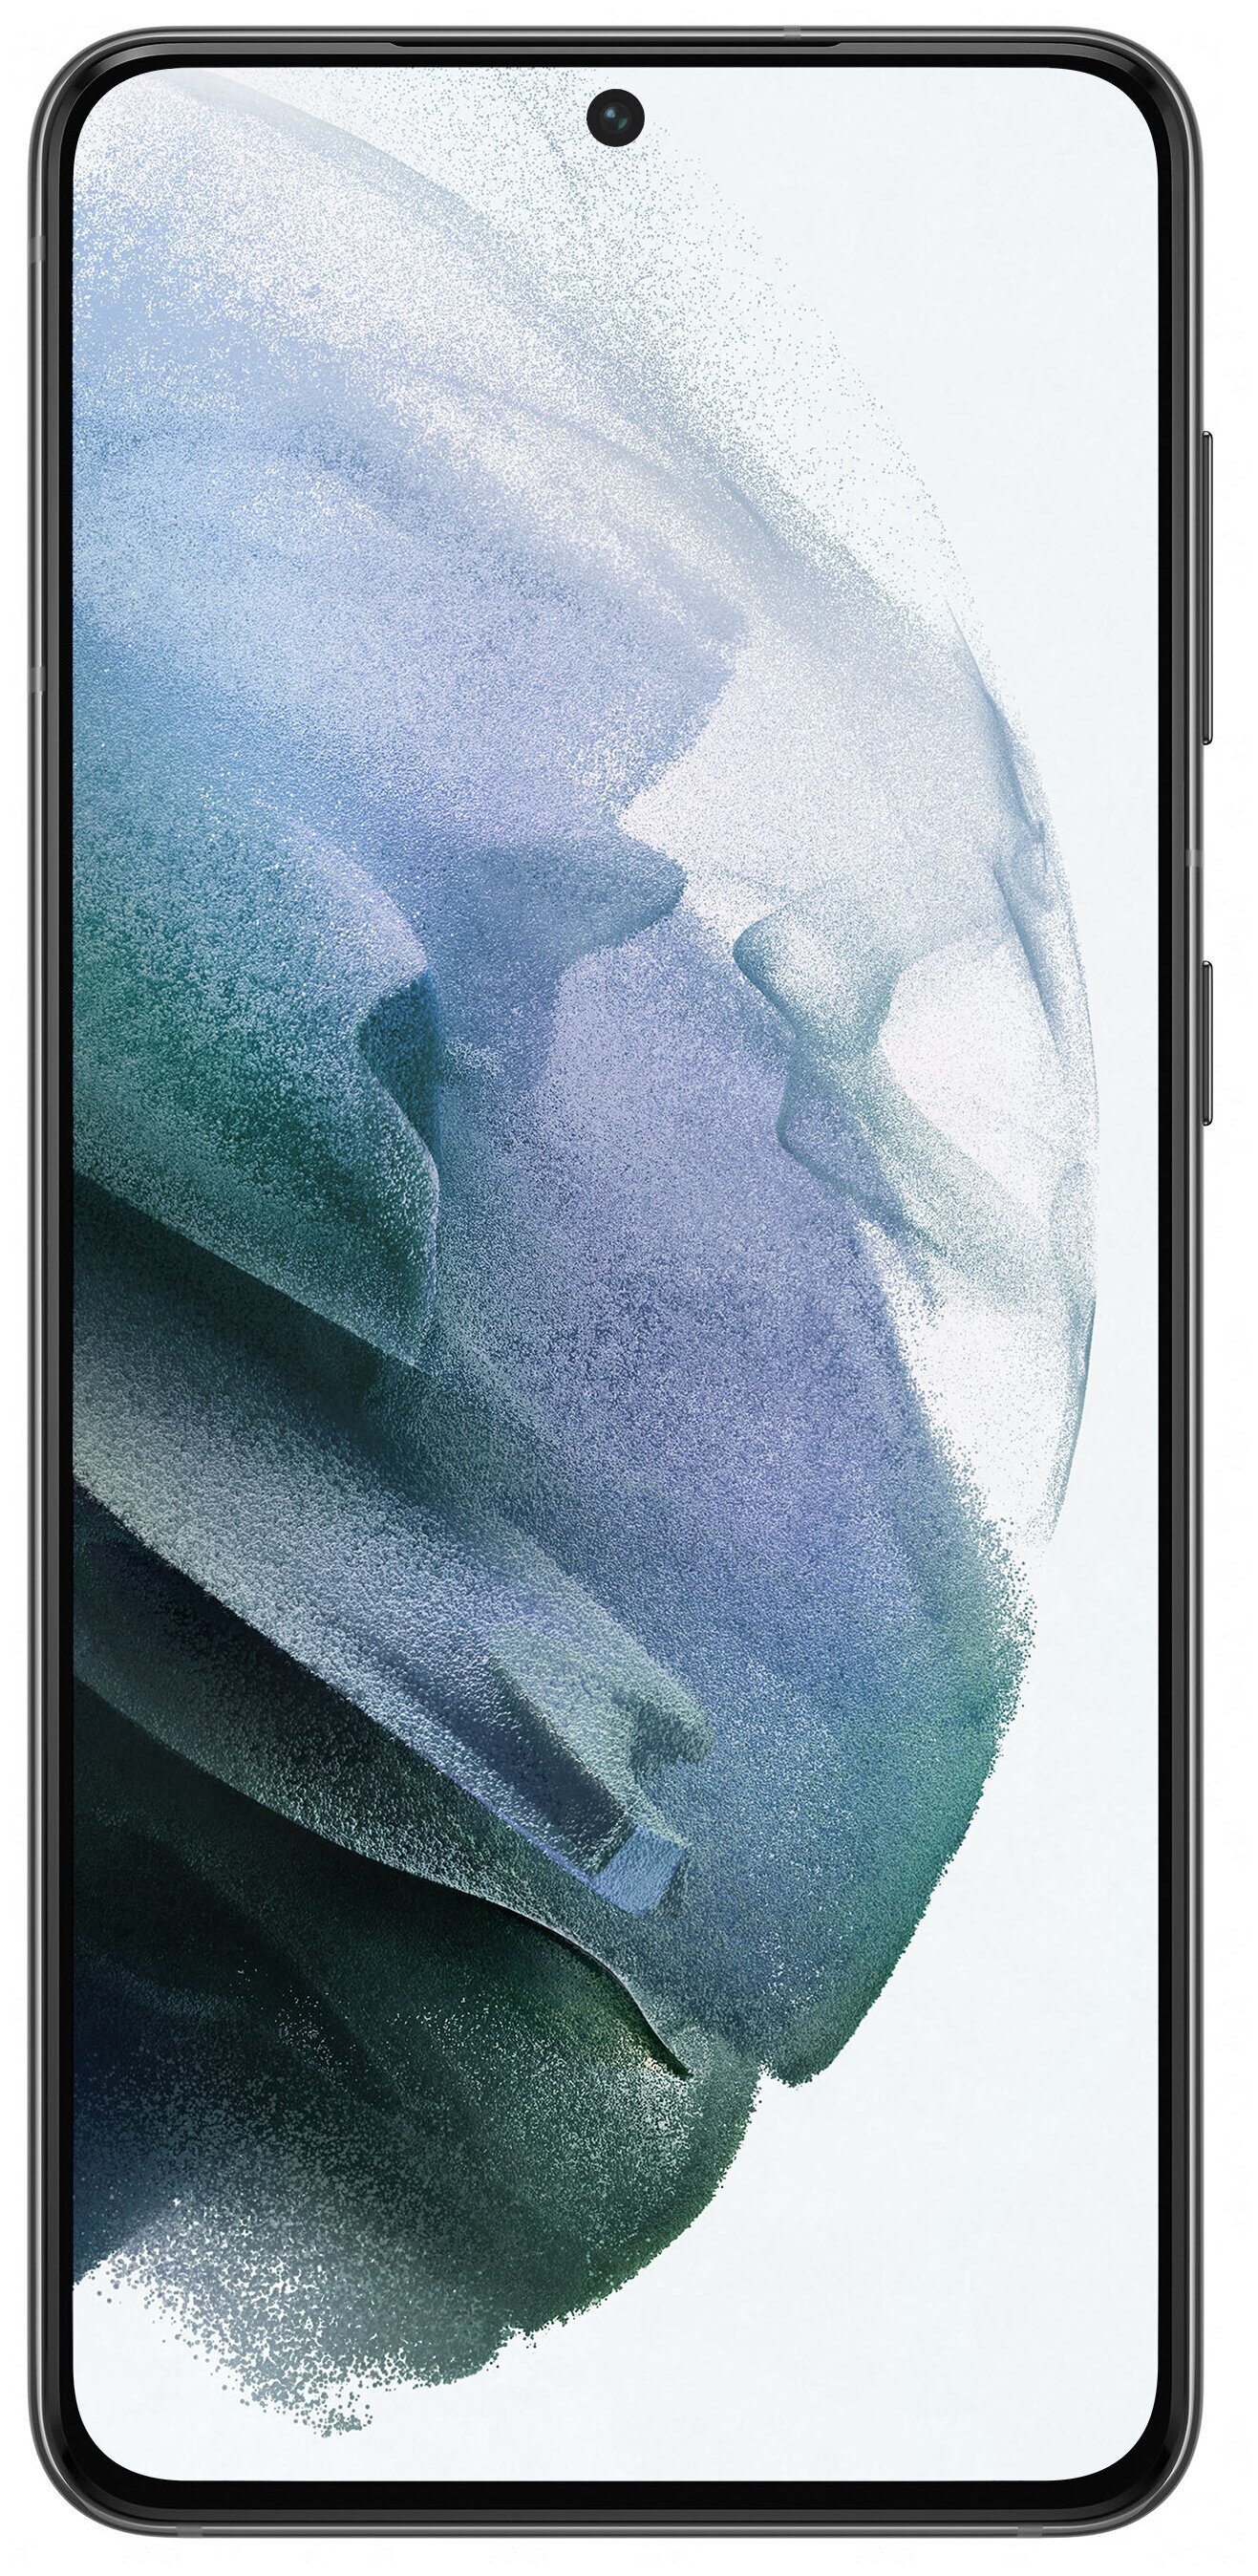 Samsung Galaxy S21 5G (SM-G991B) - встроенная память: 256 ГБ, 128 ГБ